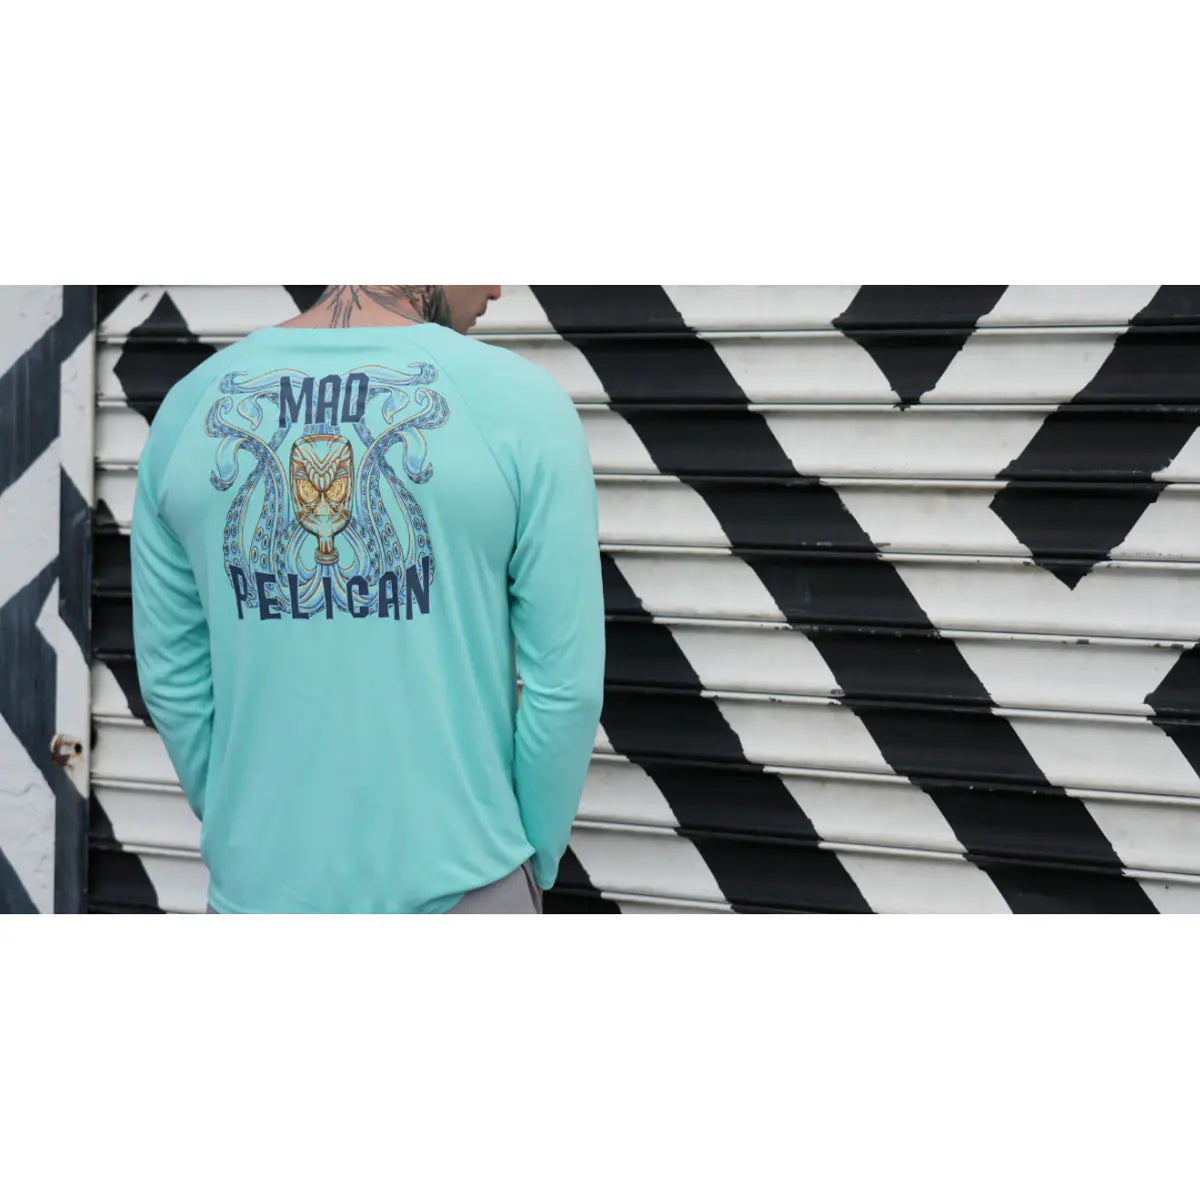 Mad Pelican Drunken Squidy Sun Kicker Raglan UV Long Sleeve T-Shirt - Aruba Blue Mad Pelican